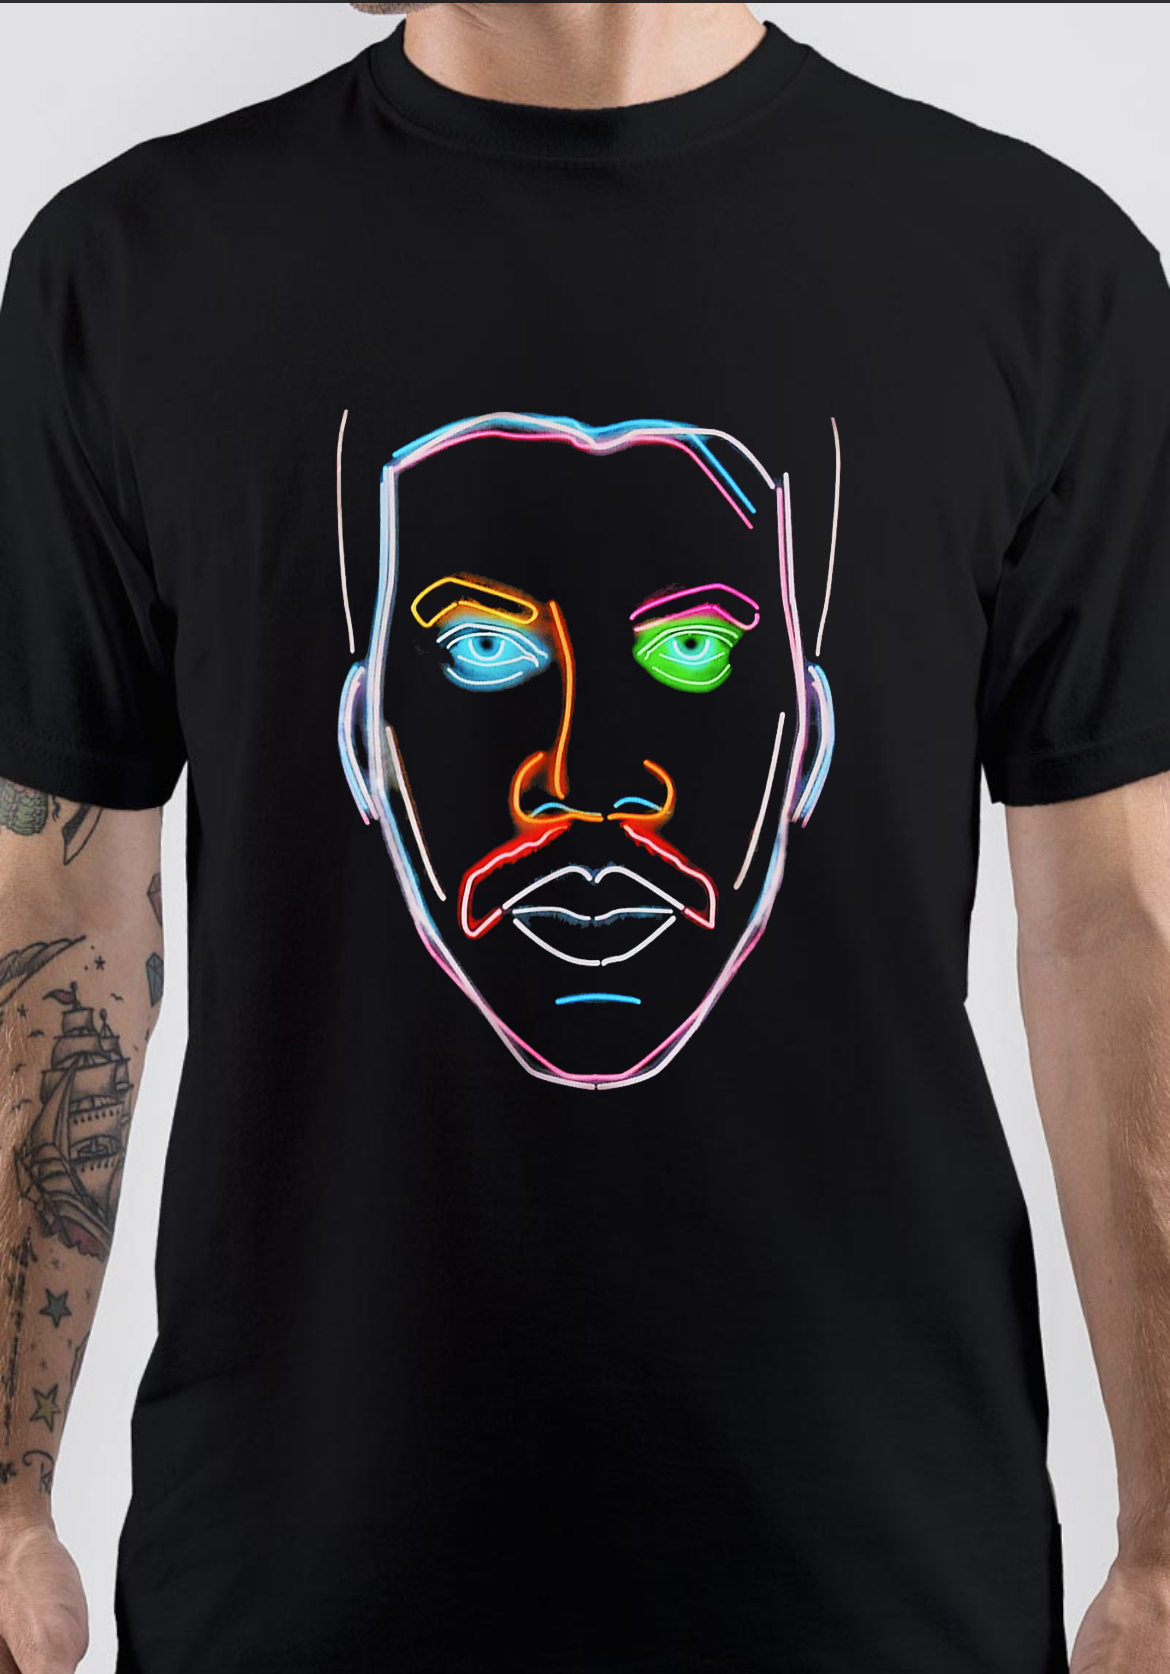 Lionel Richie T-Shirt And Merchandise